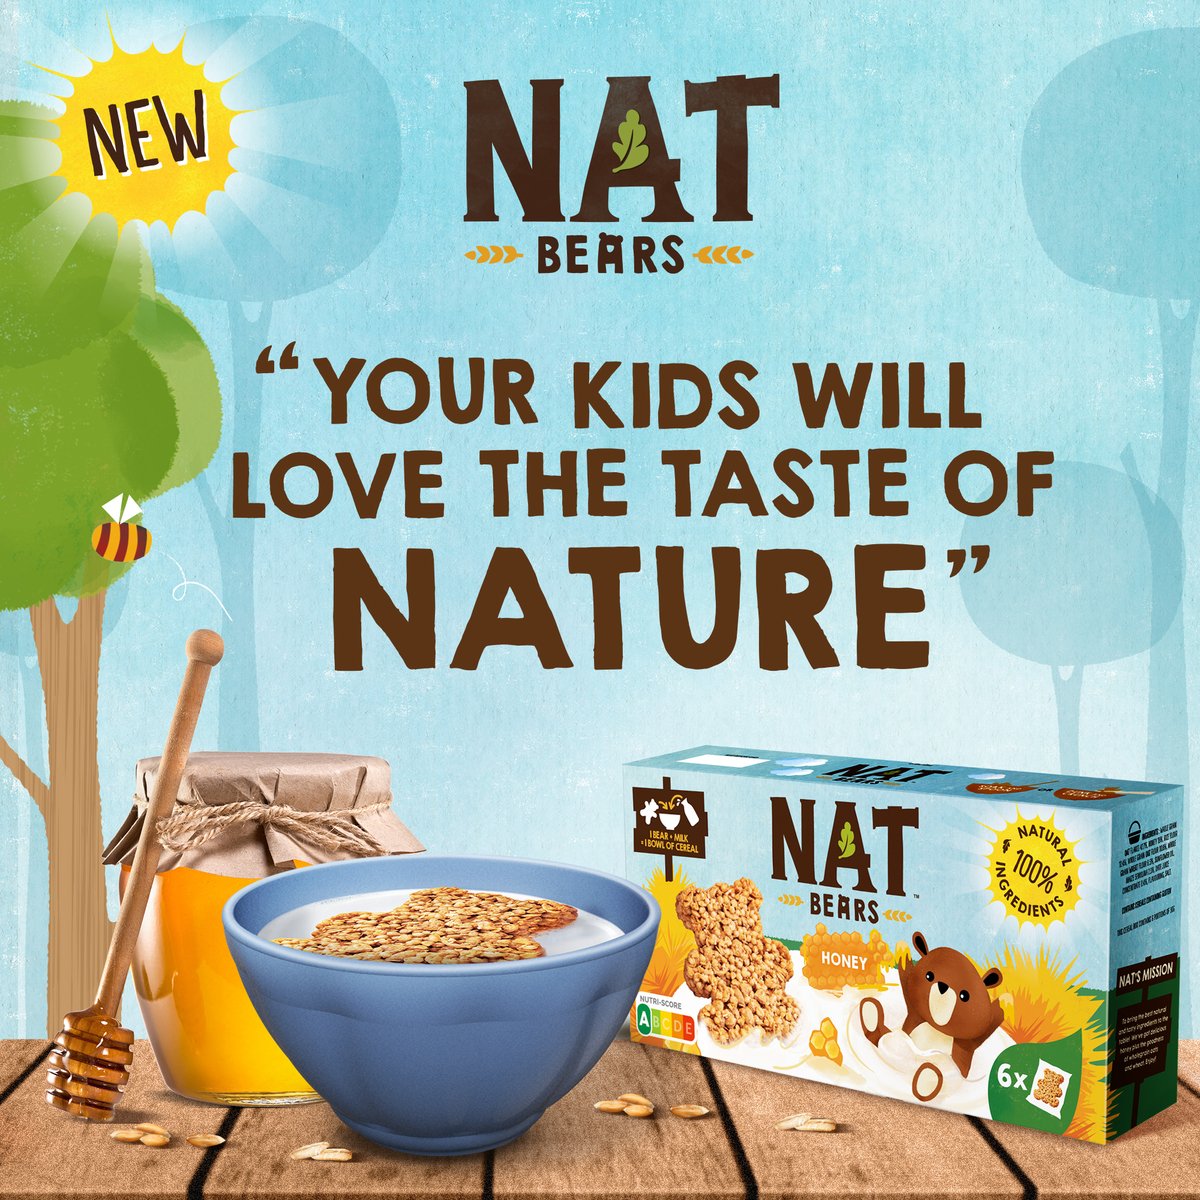 NAT Bear Cereals with Honey 6 x 32 g